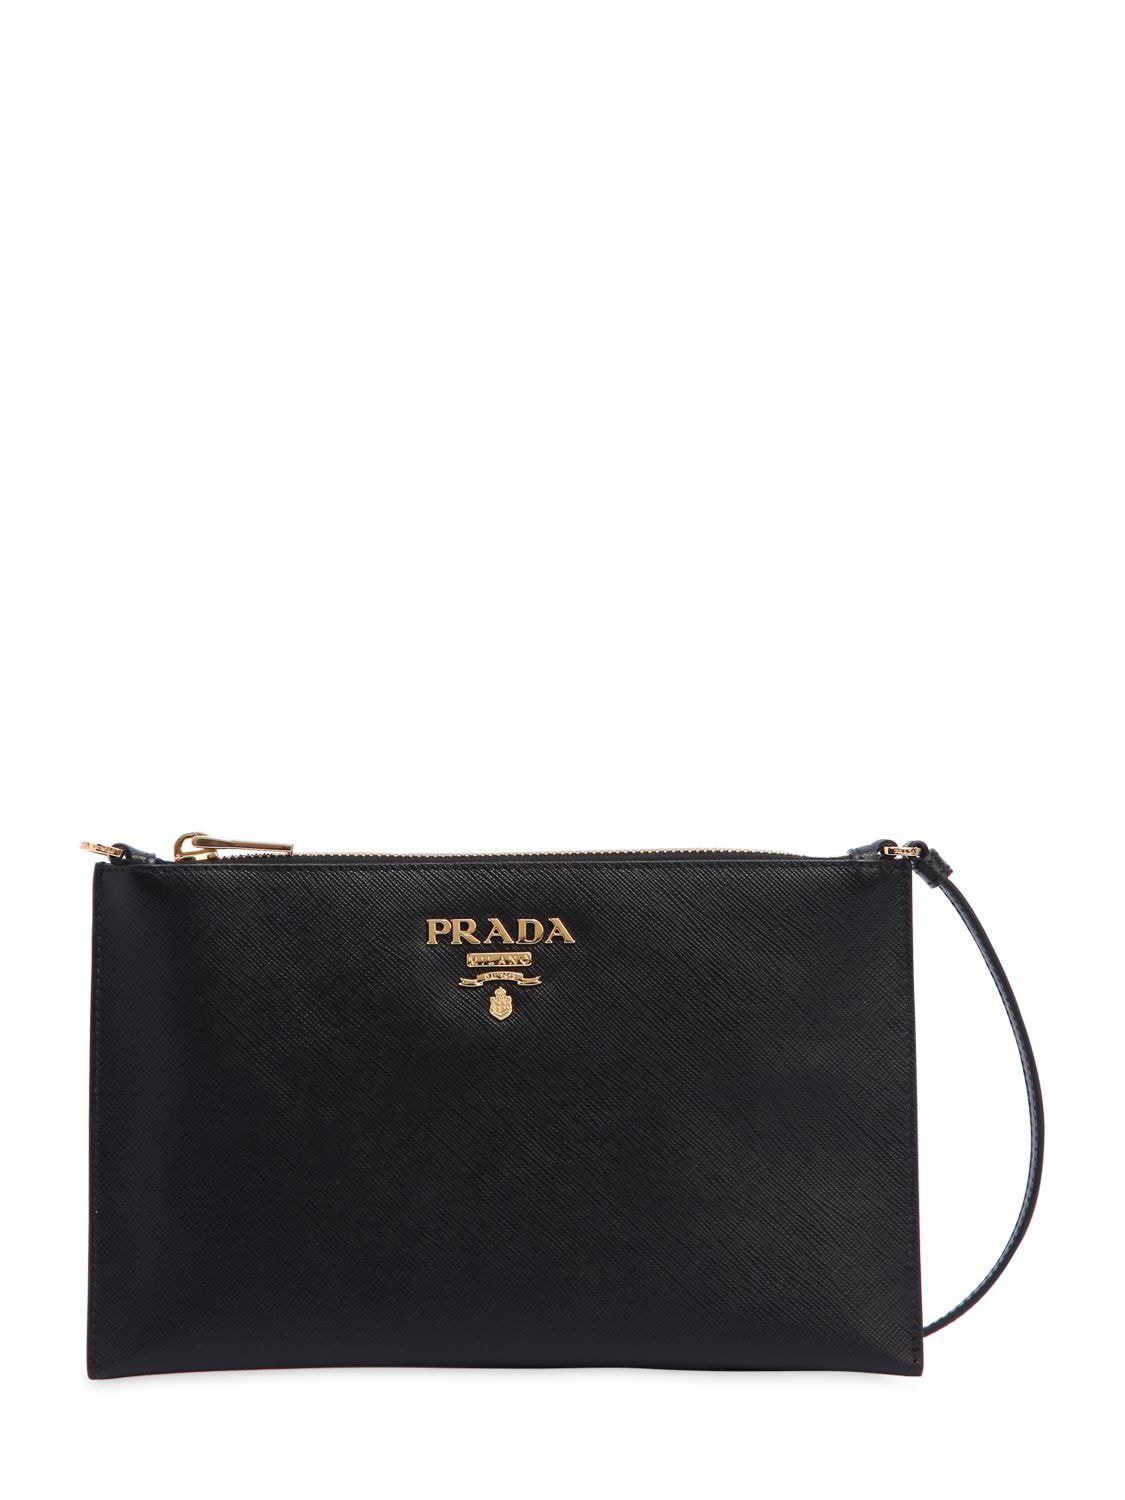 Prada Saffiano Leather Flat Shoulder Bag In Black